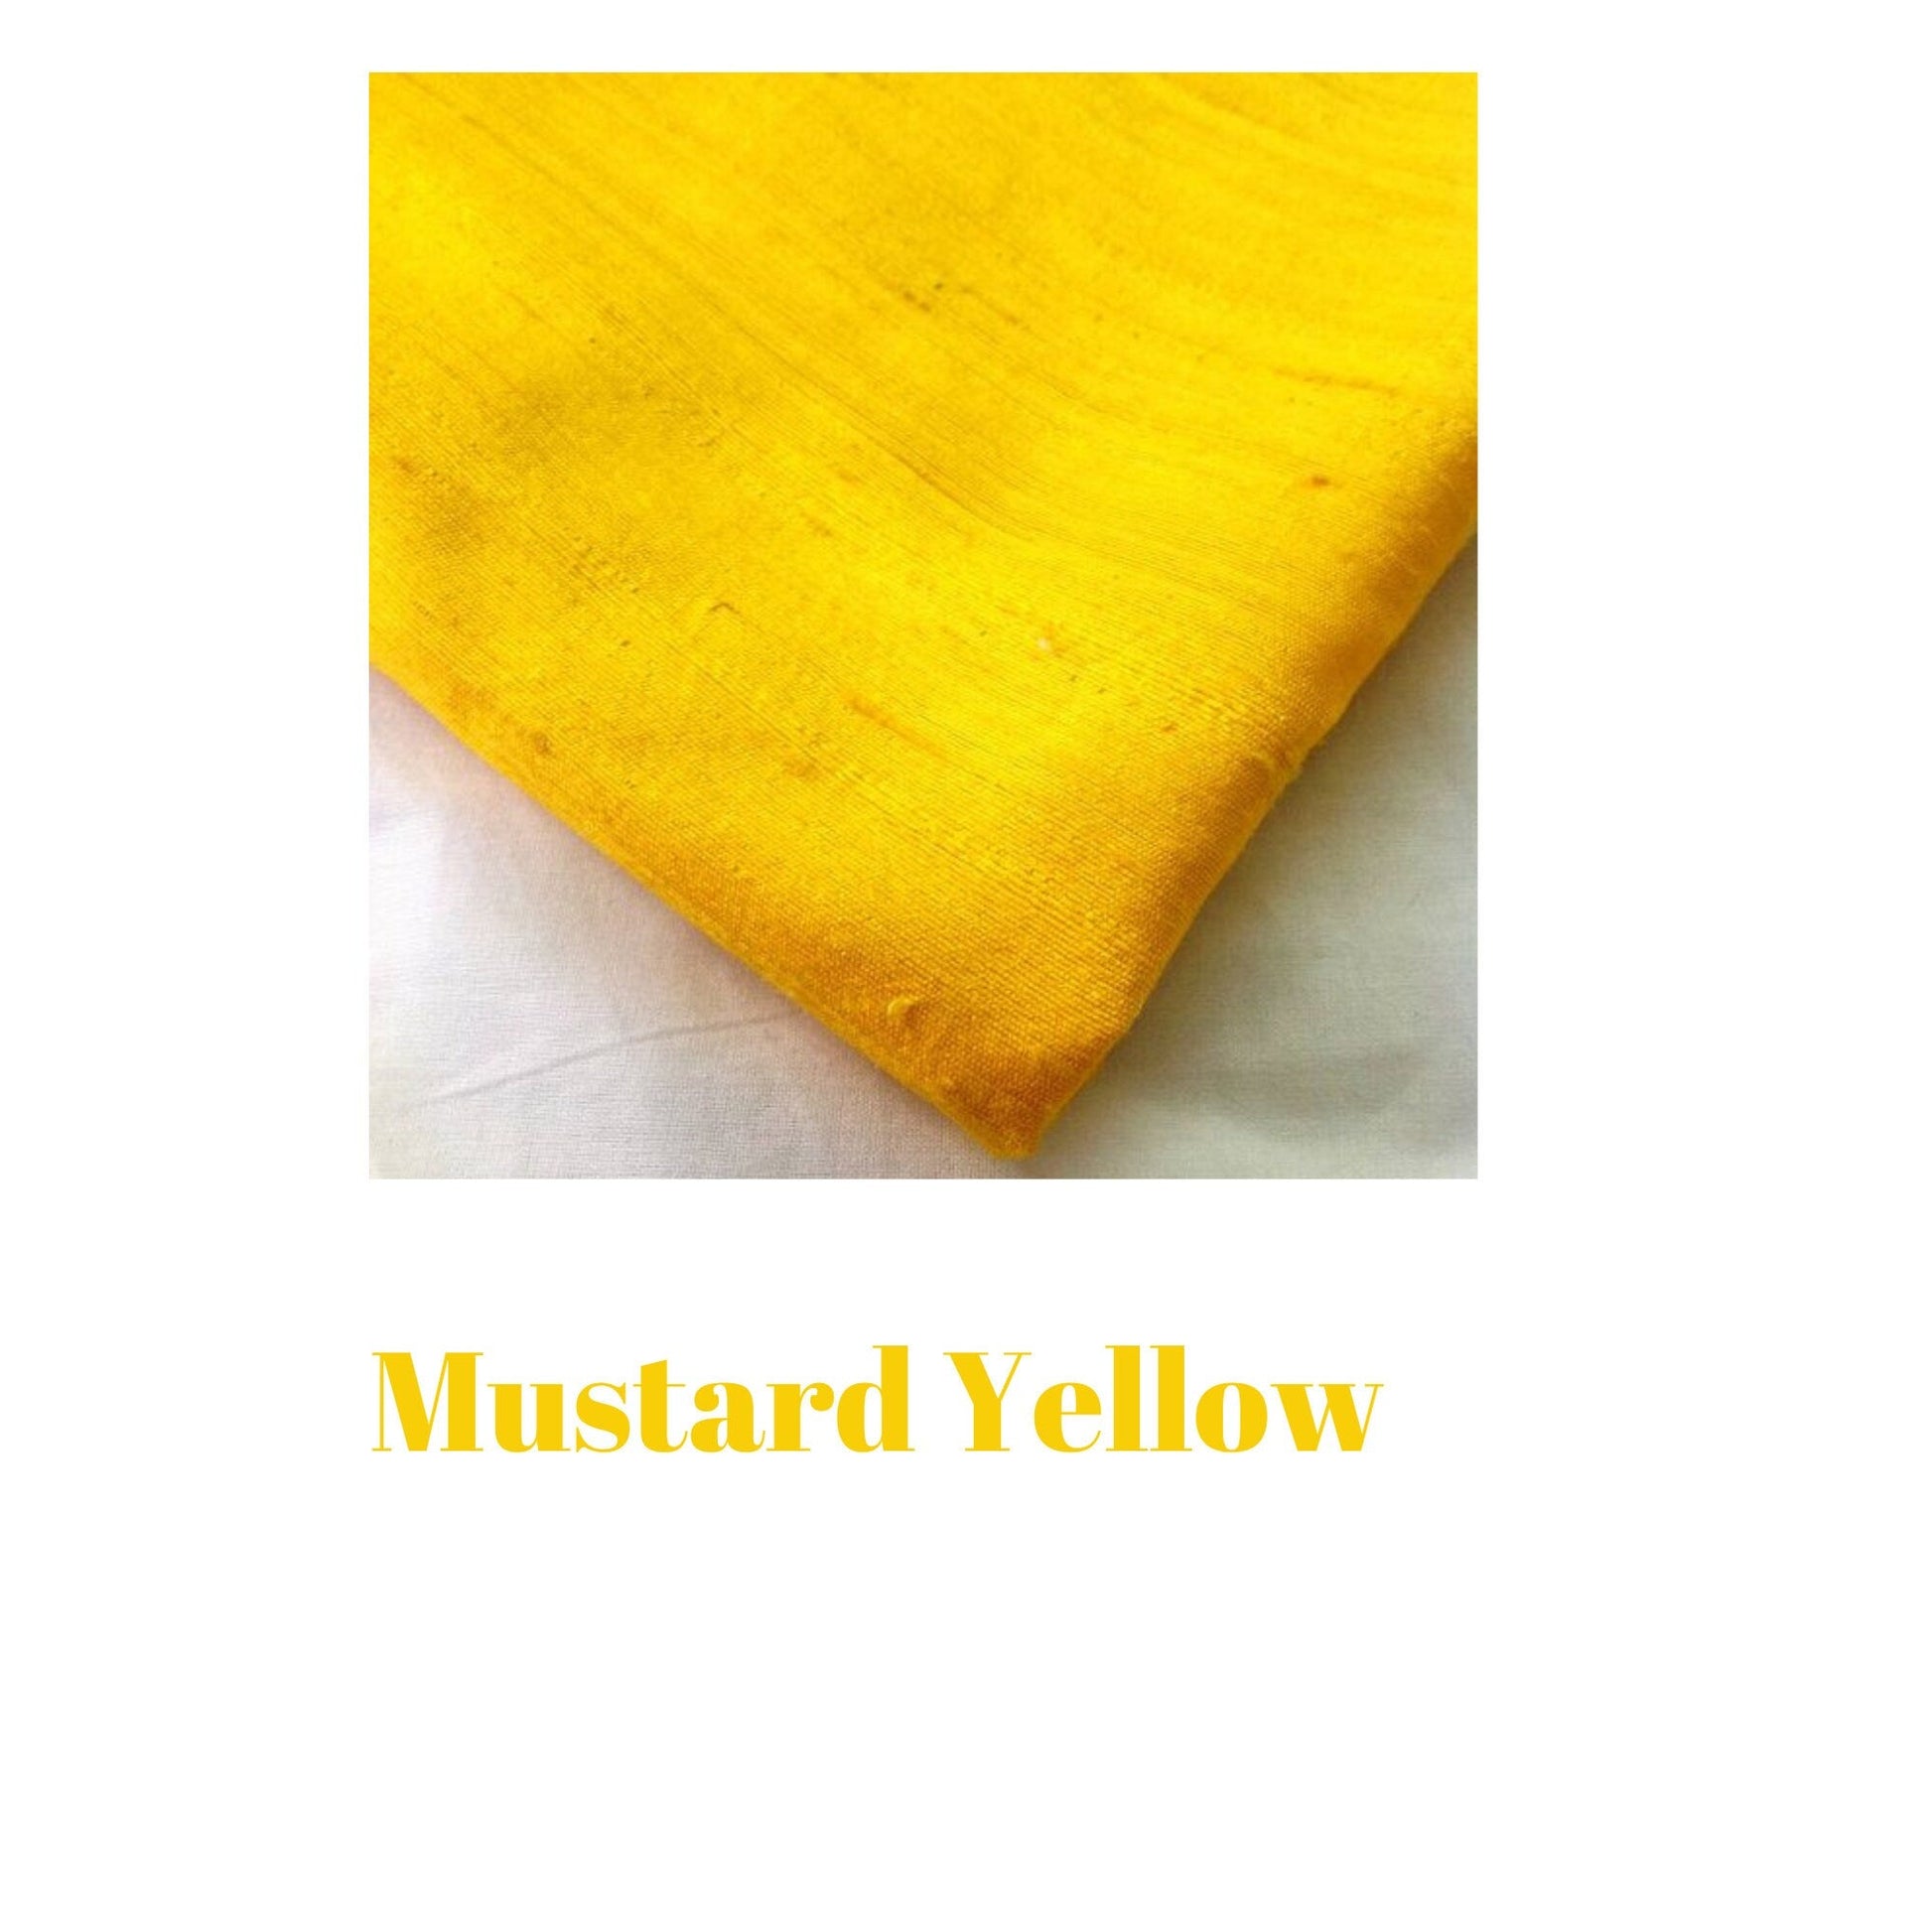 Mustard Colour designer yellow kids indowestern sherwani for kids/ Indian suit for kids, boys/Indian dress for boys